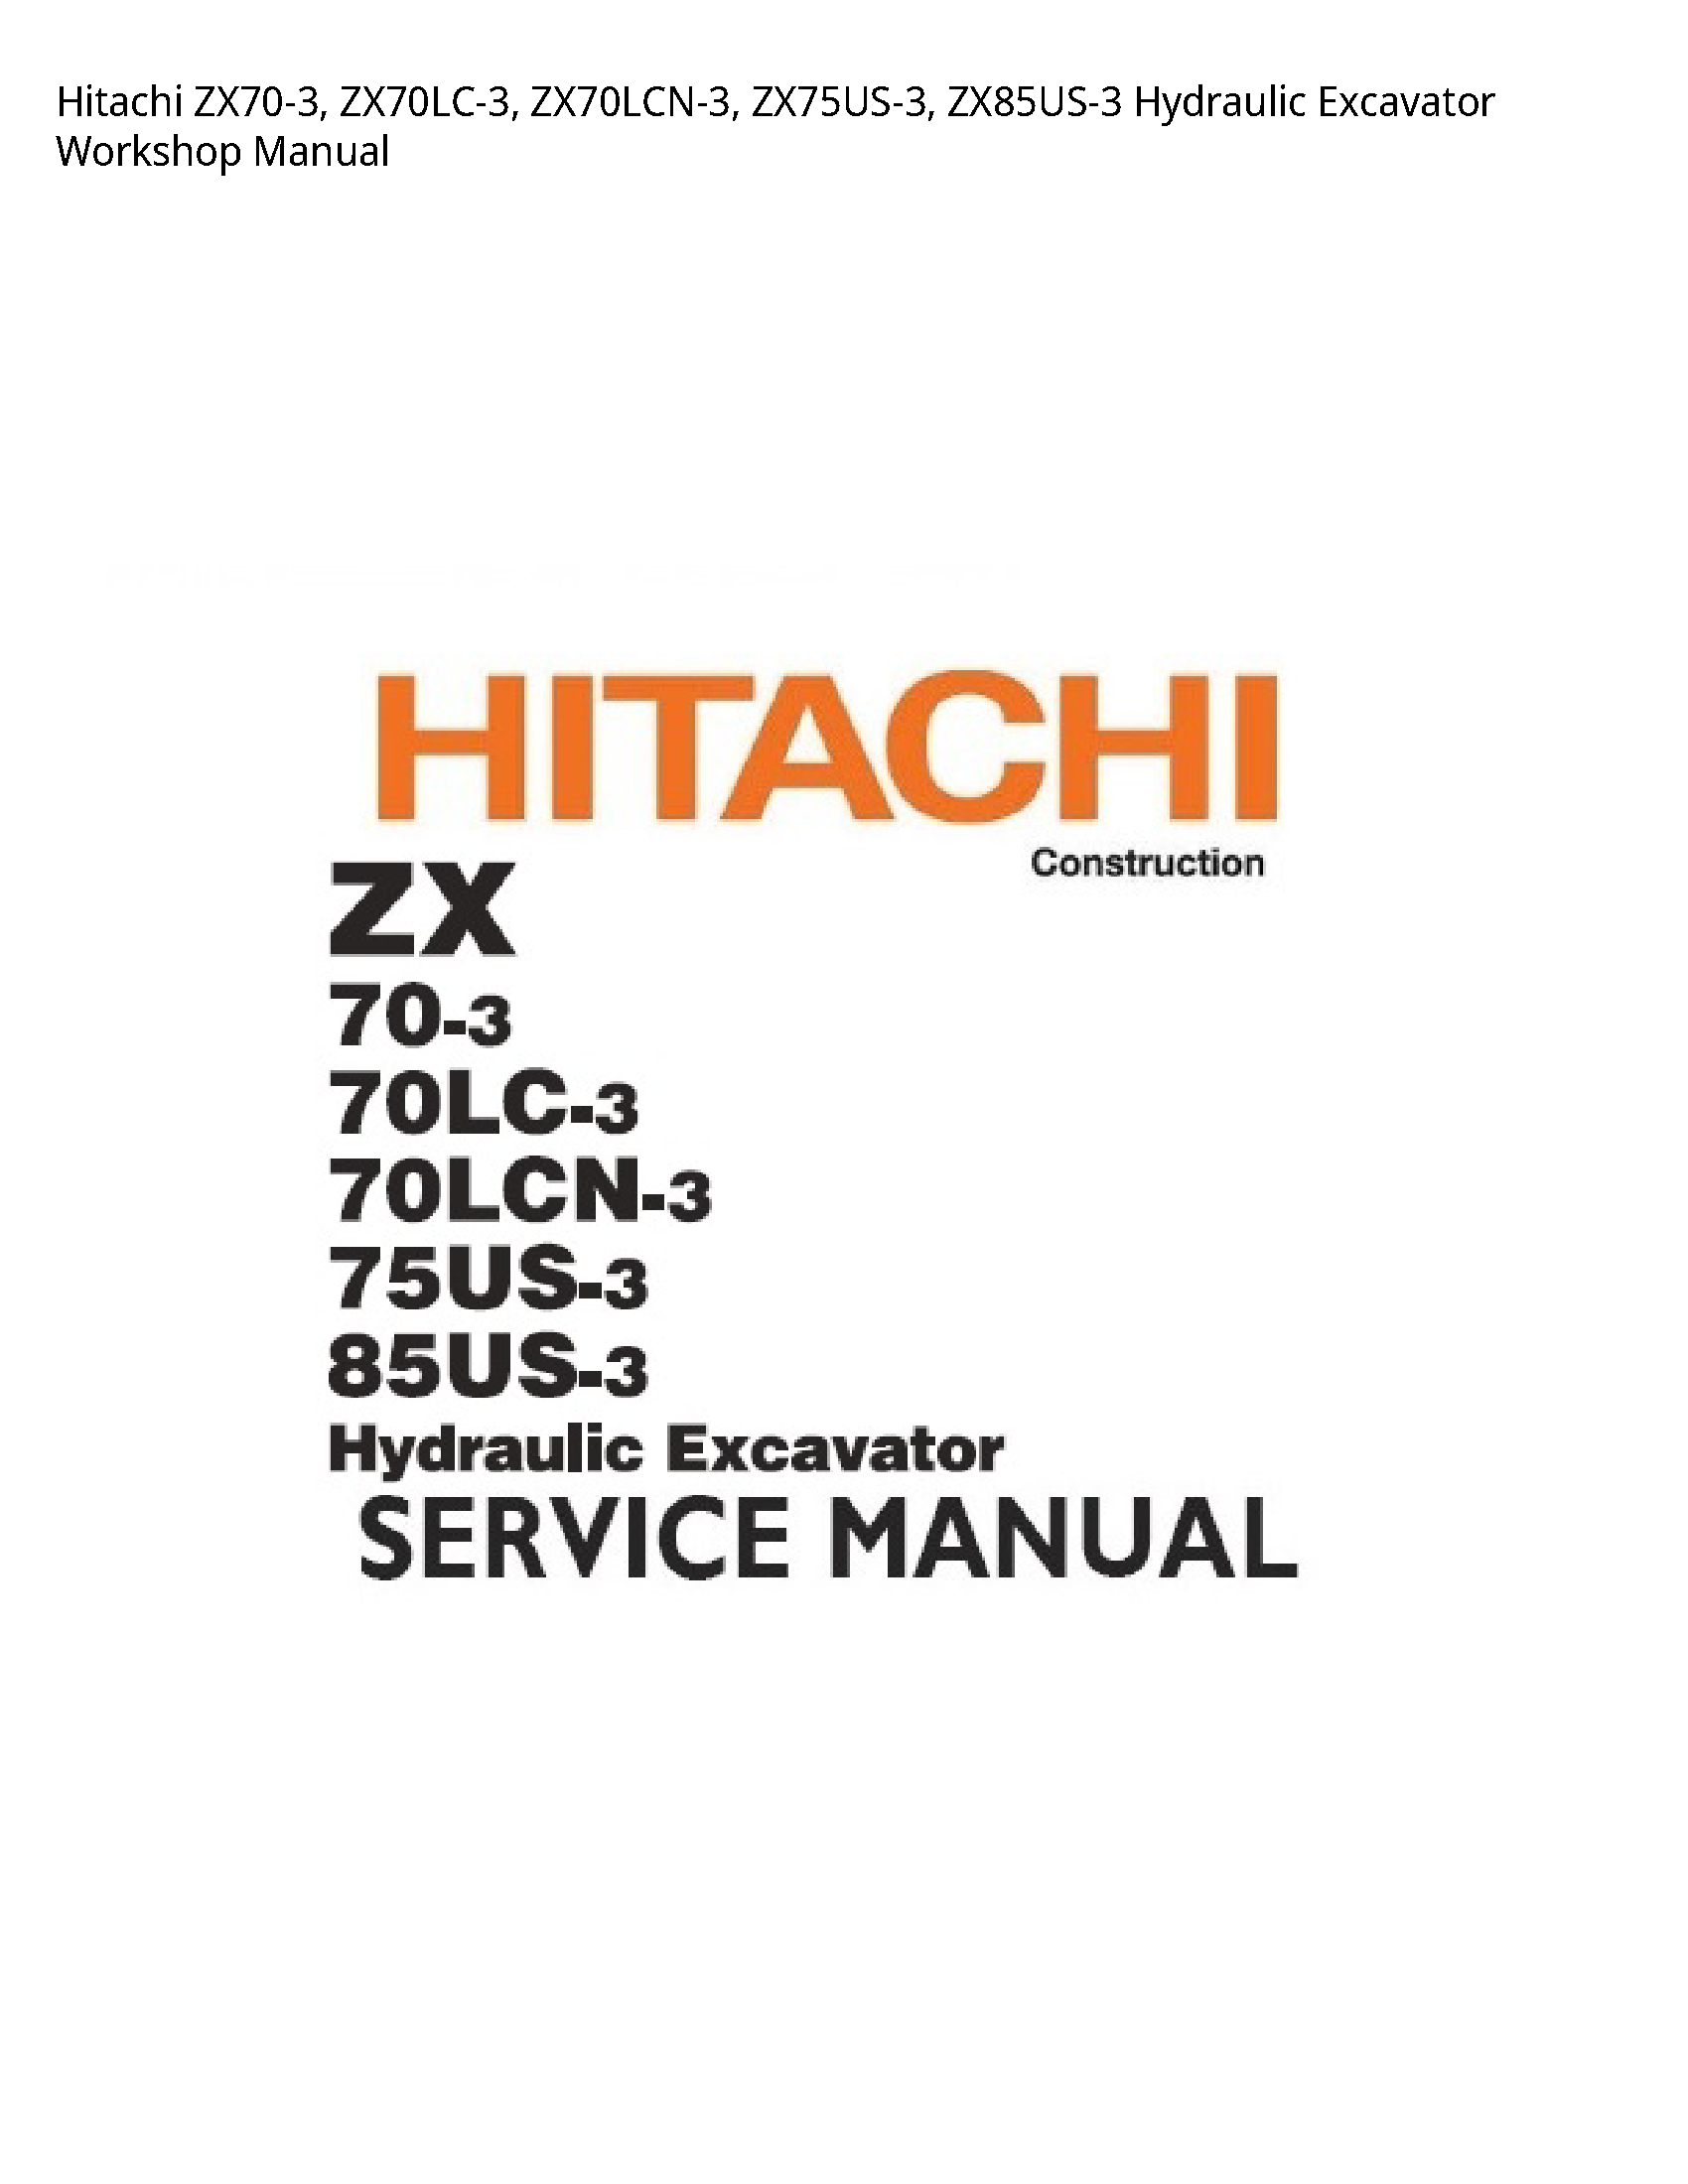 Hitachi ZX70-3 Hydraulic Excavator manual